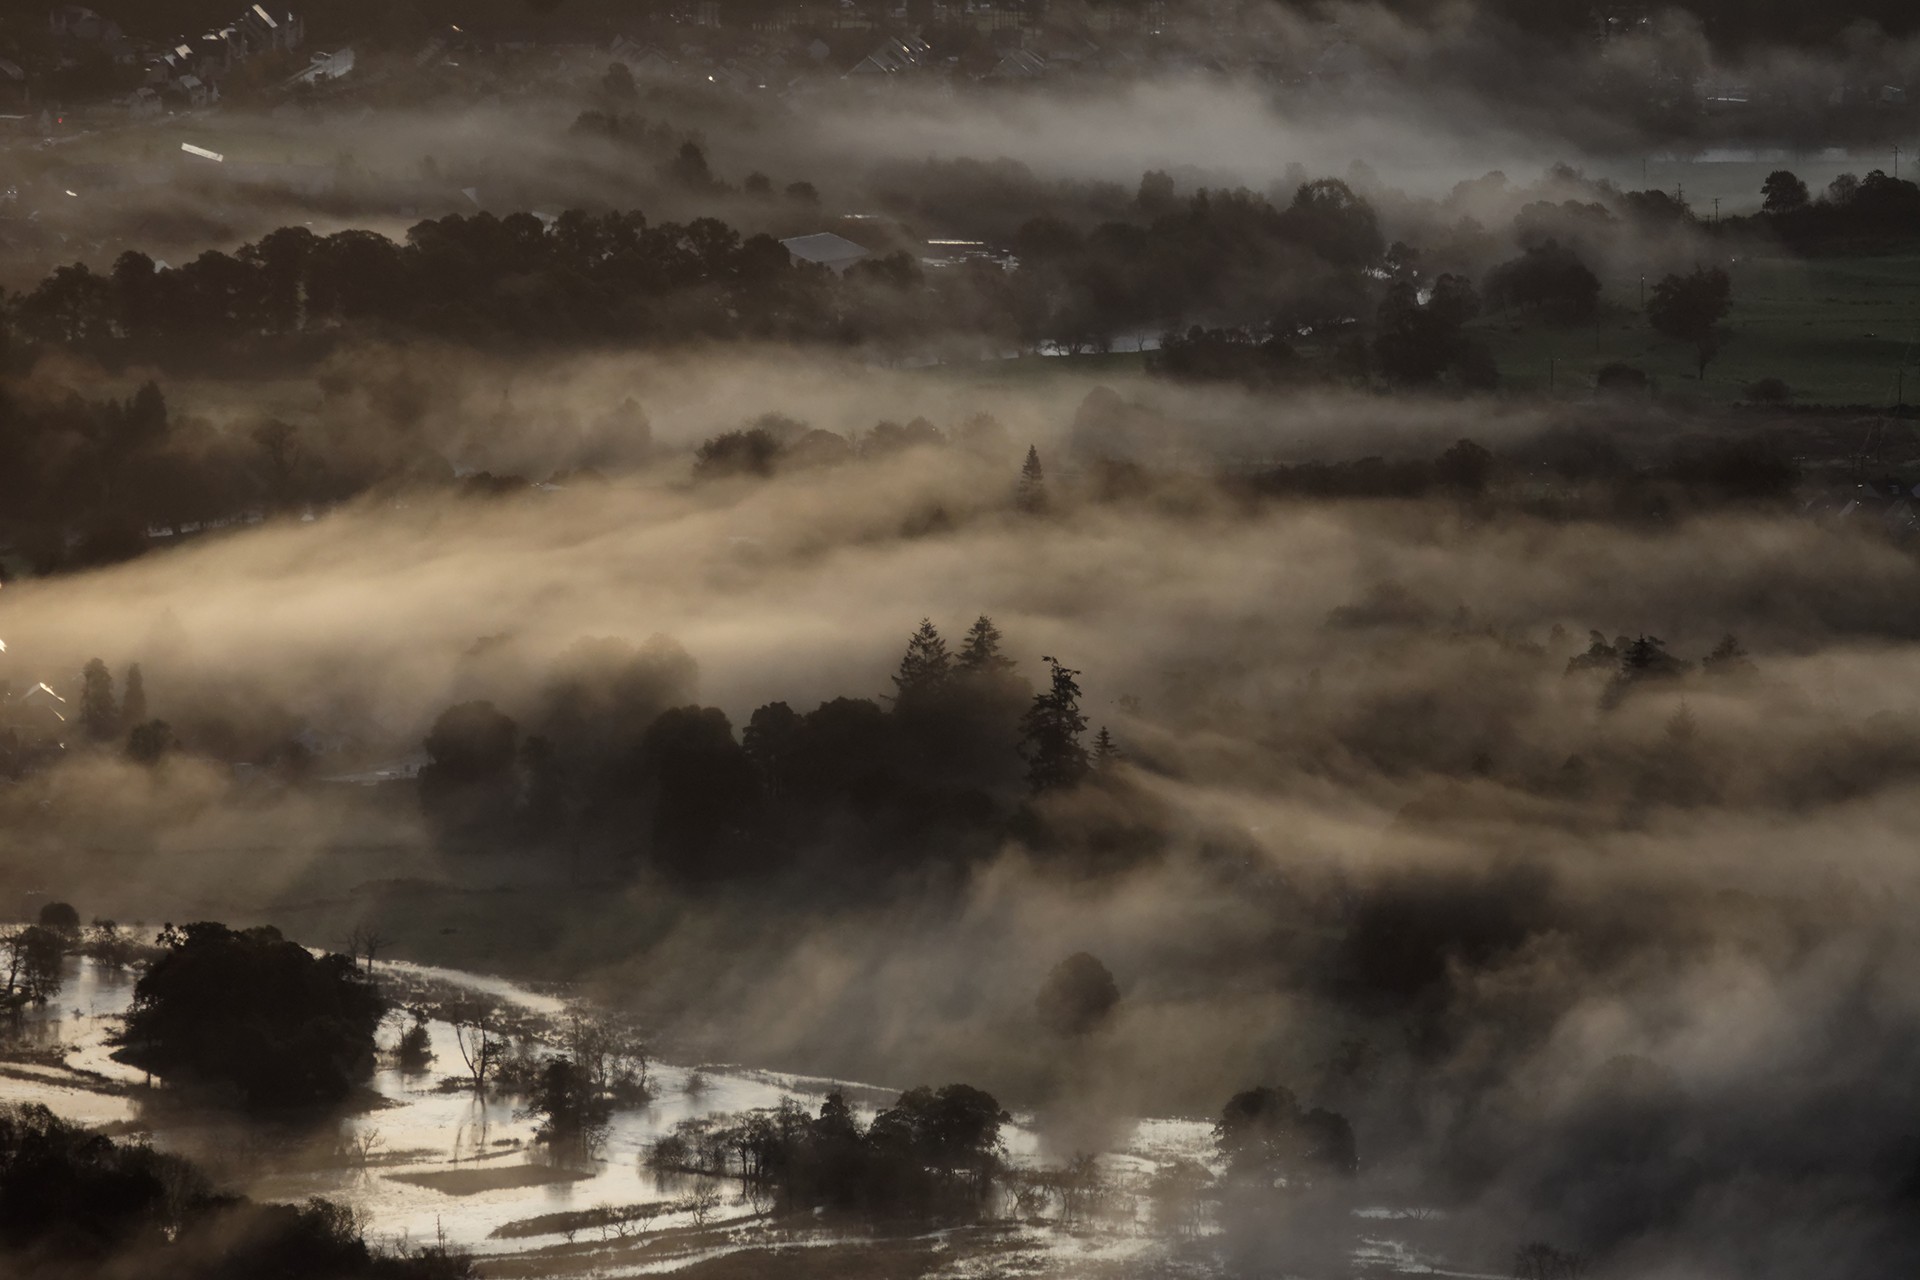 A mist over the Callender area. Photo: Jakub Orłowski